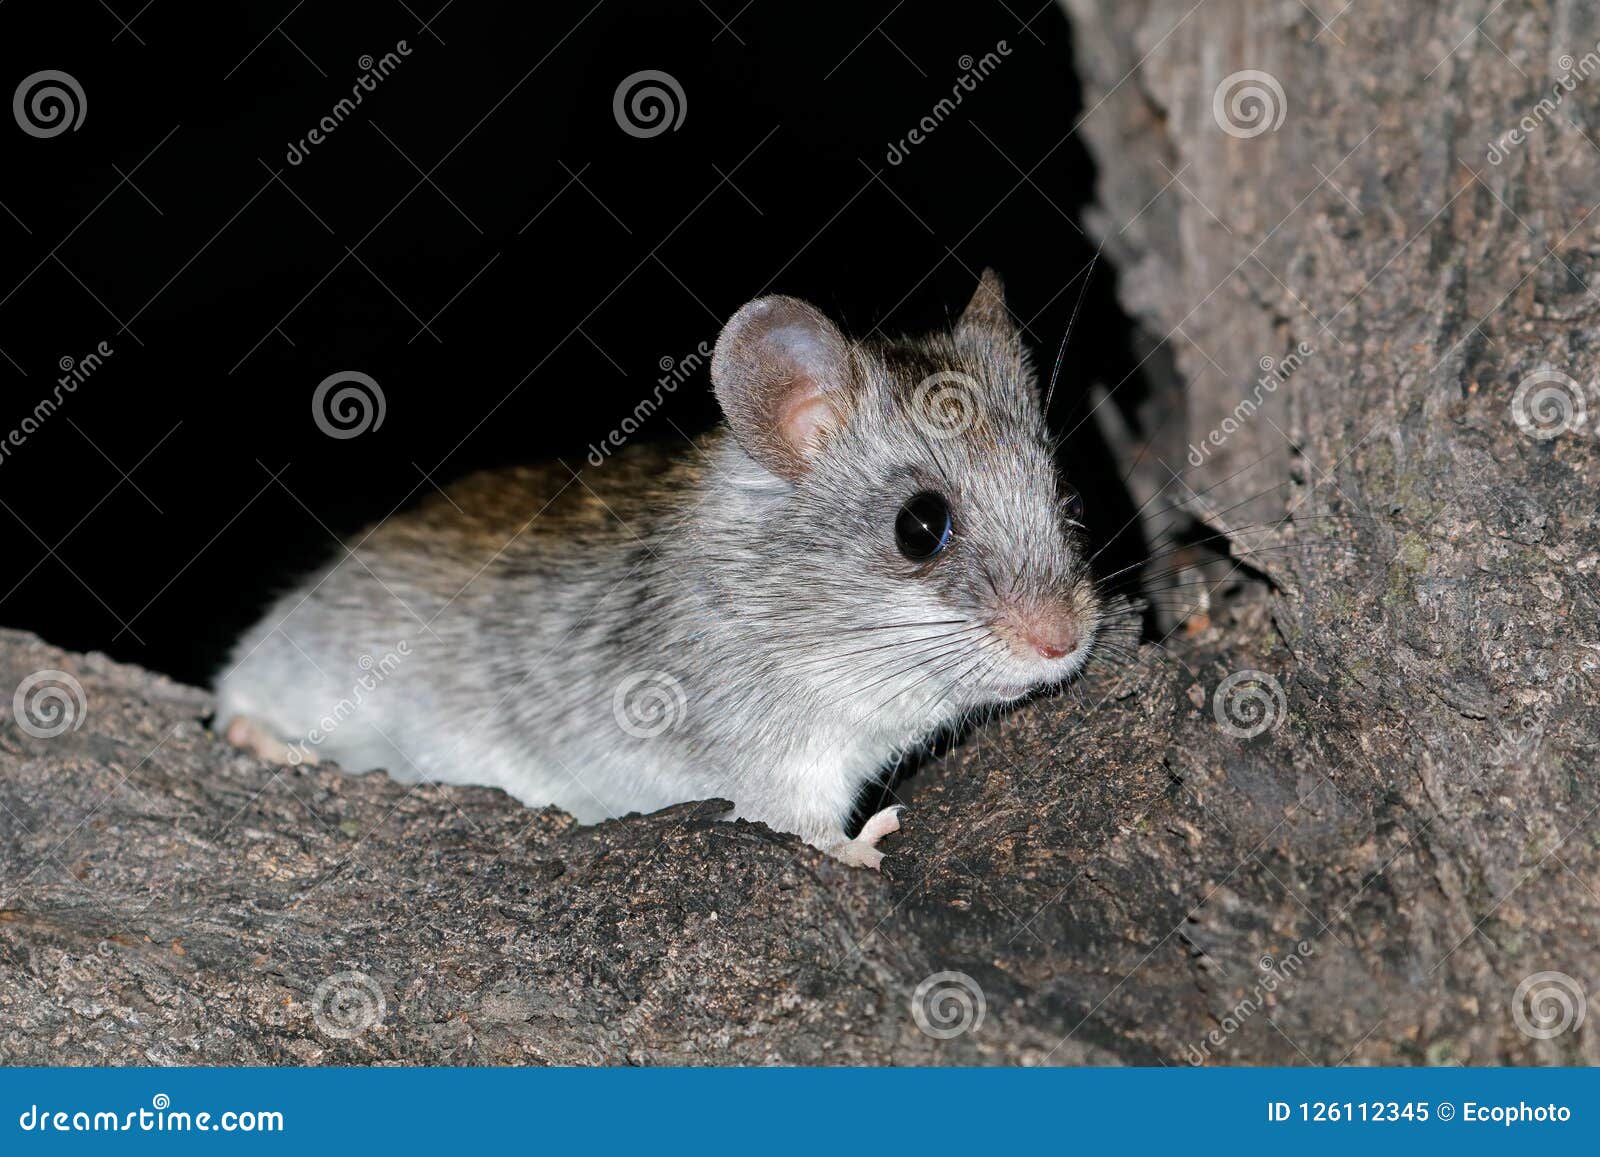 nocturnal acacia tree rat